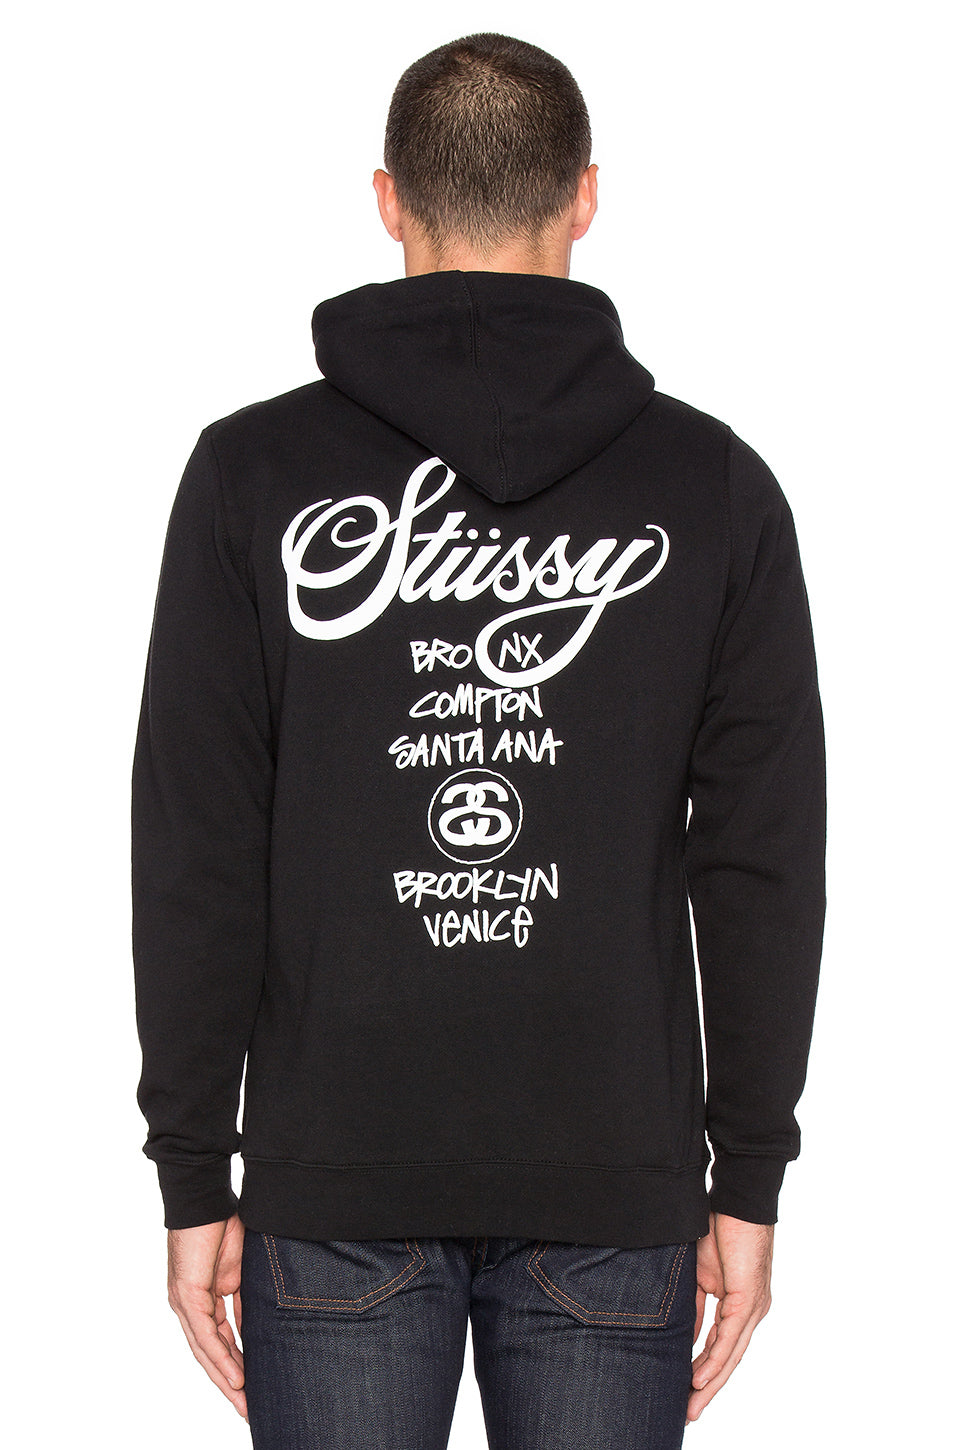 Stussy World Tour Hoodies XL - Hooded Sweatshirt